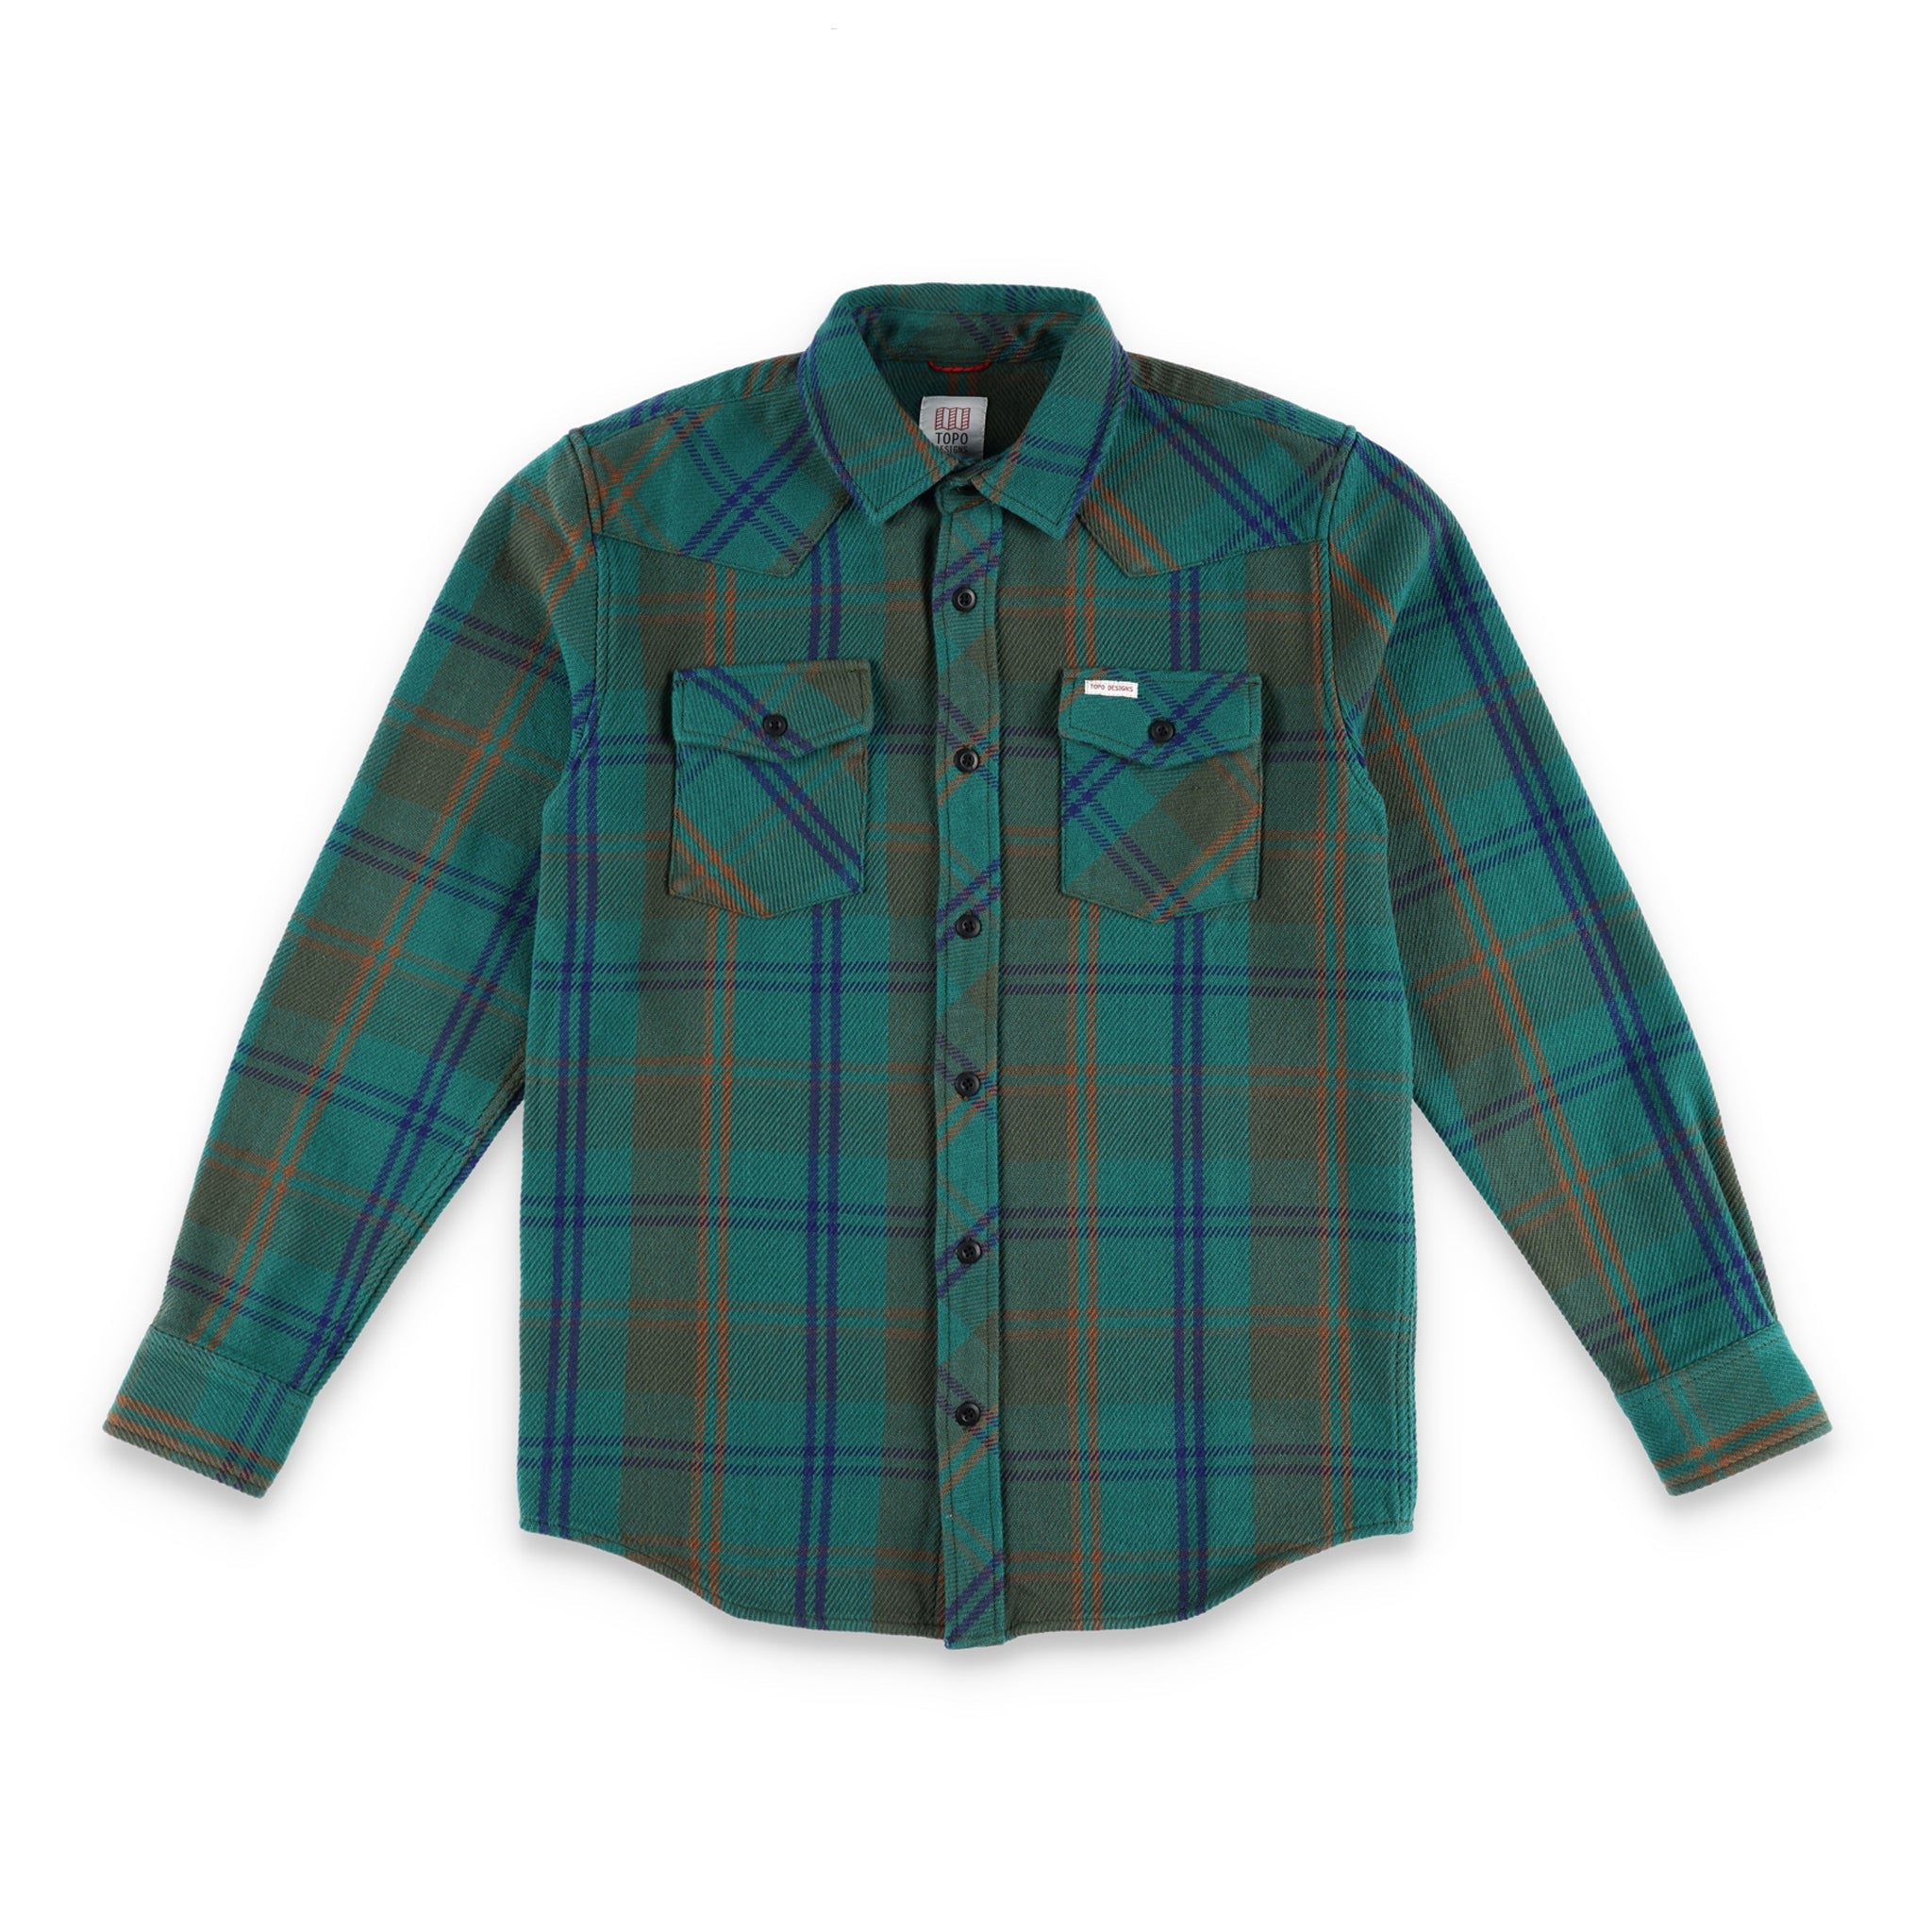 Topo Designs Men's Mountain Shirt Heavyweight "Green / Earth Plaid" brown blue button-up.